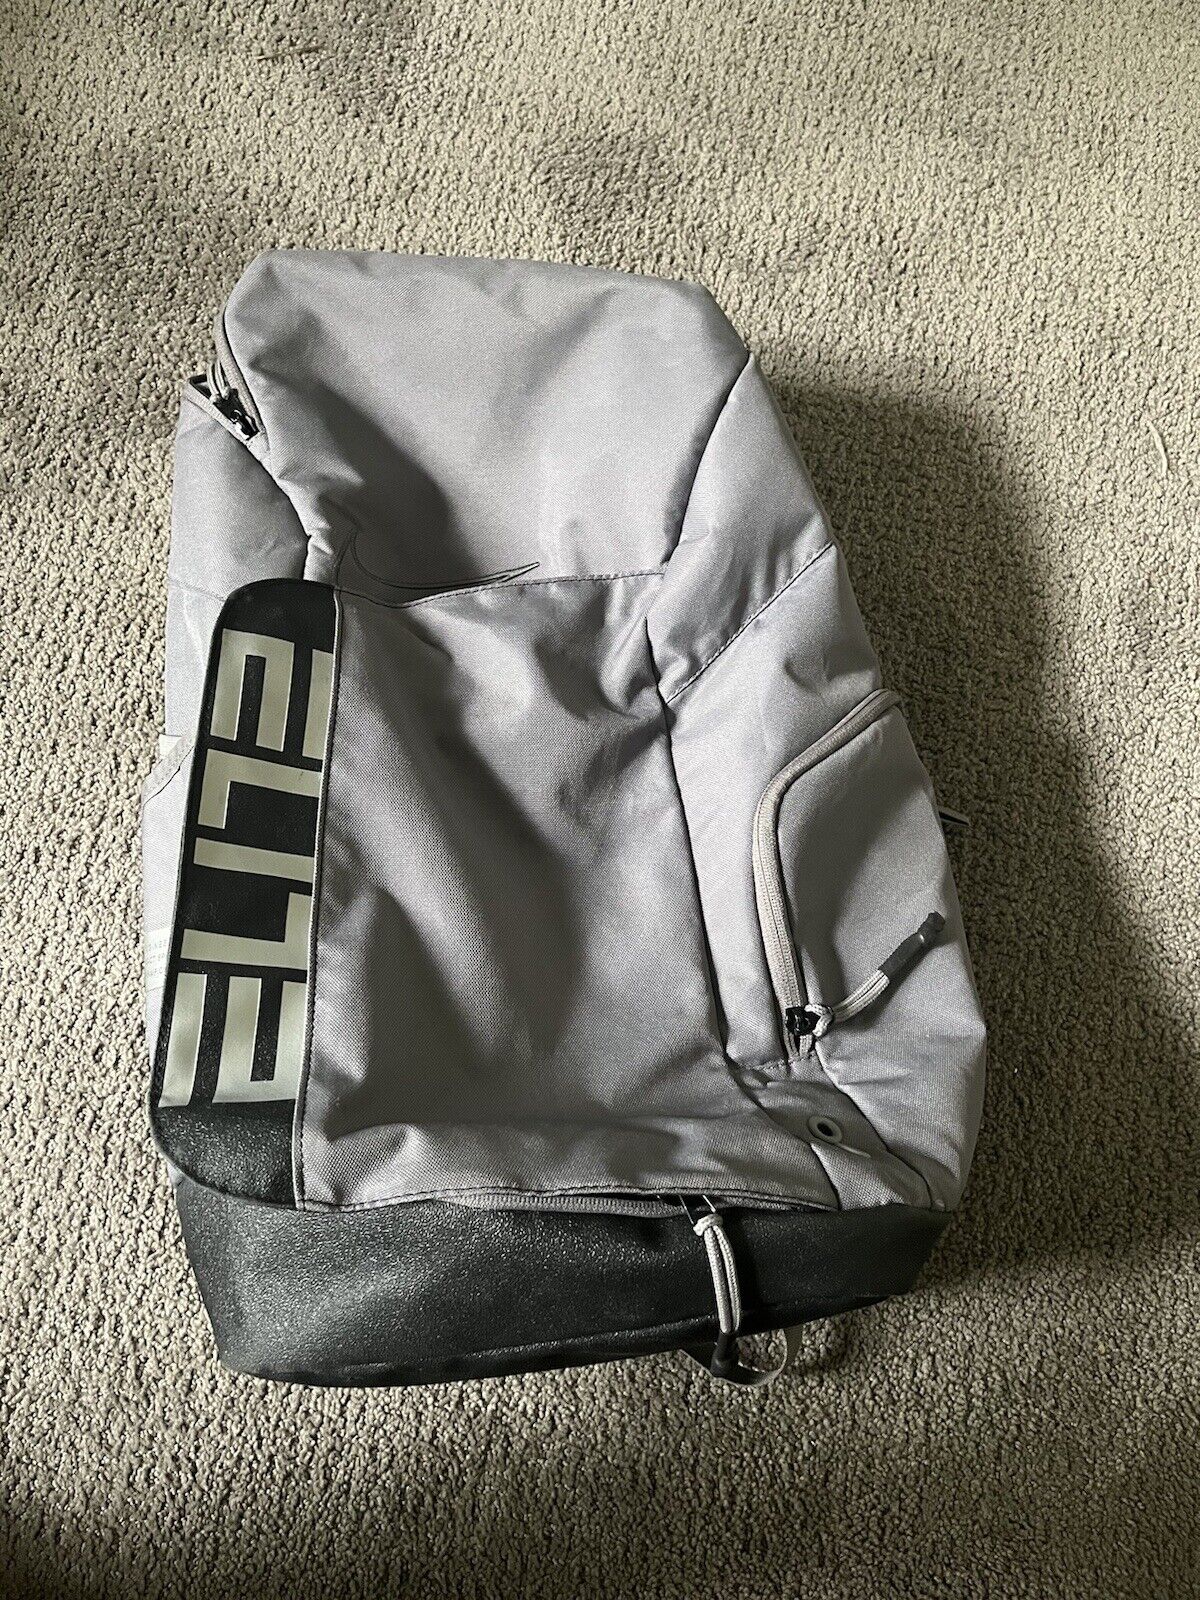 Nike elite pro basketball backpack Gray - image 1